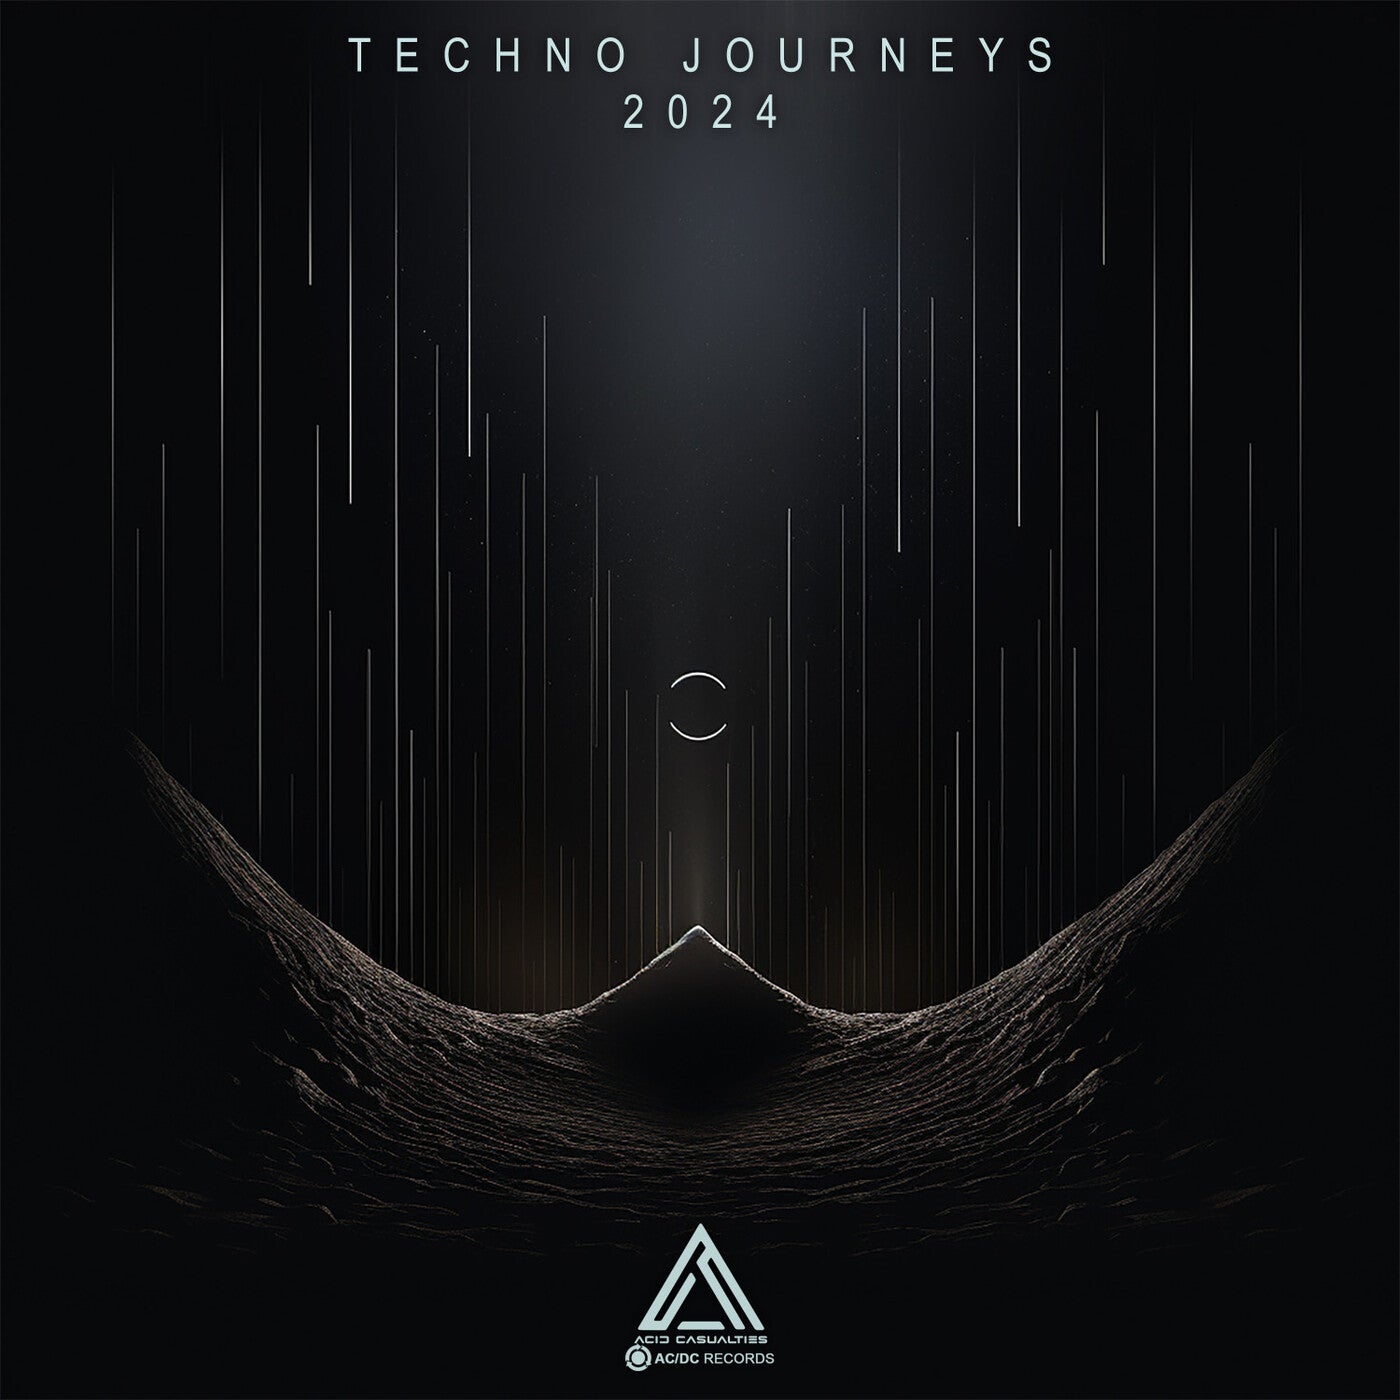 Techno Journeys 2024